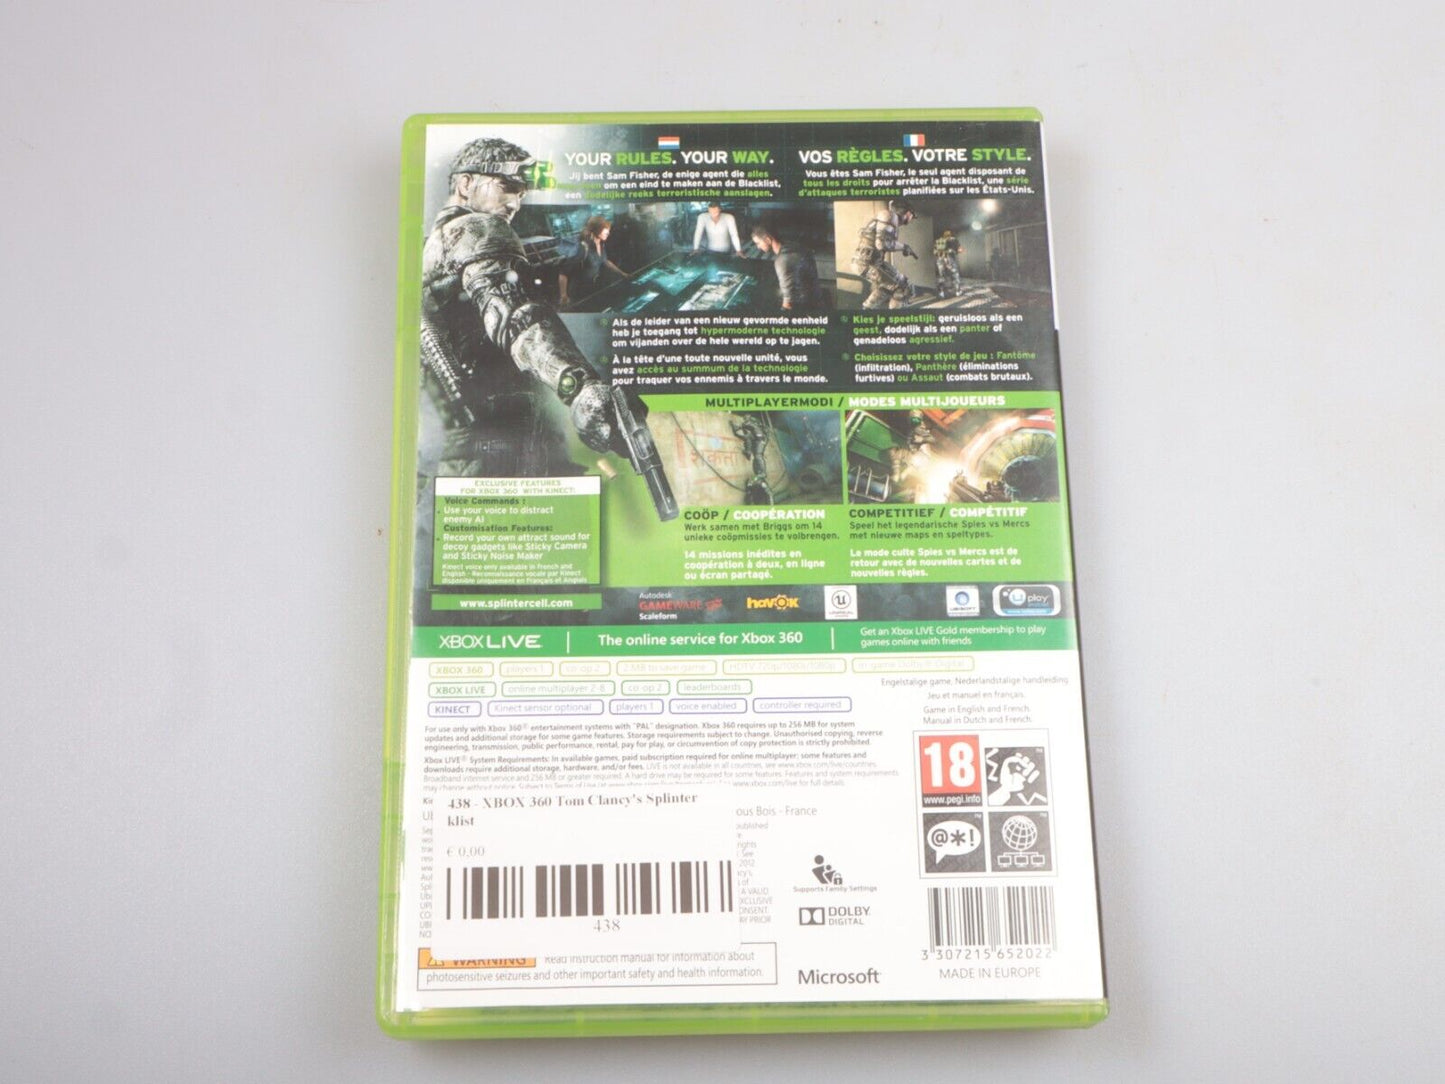 Xbox360 | Tom Clancy's Splinter Cell-zwarte lijst 